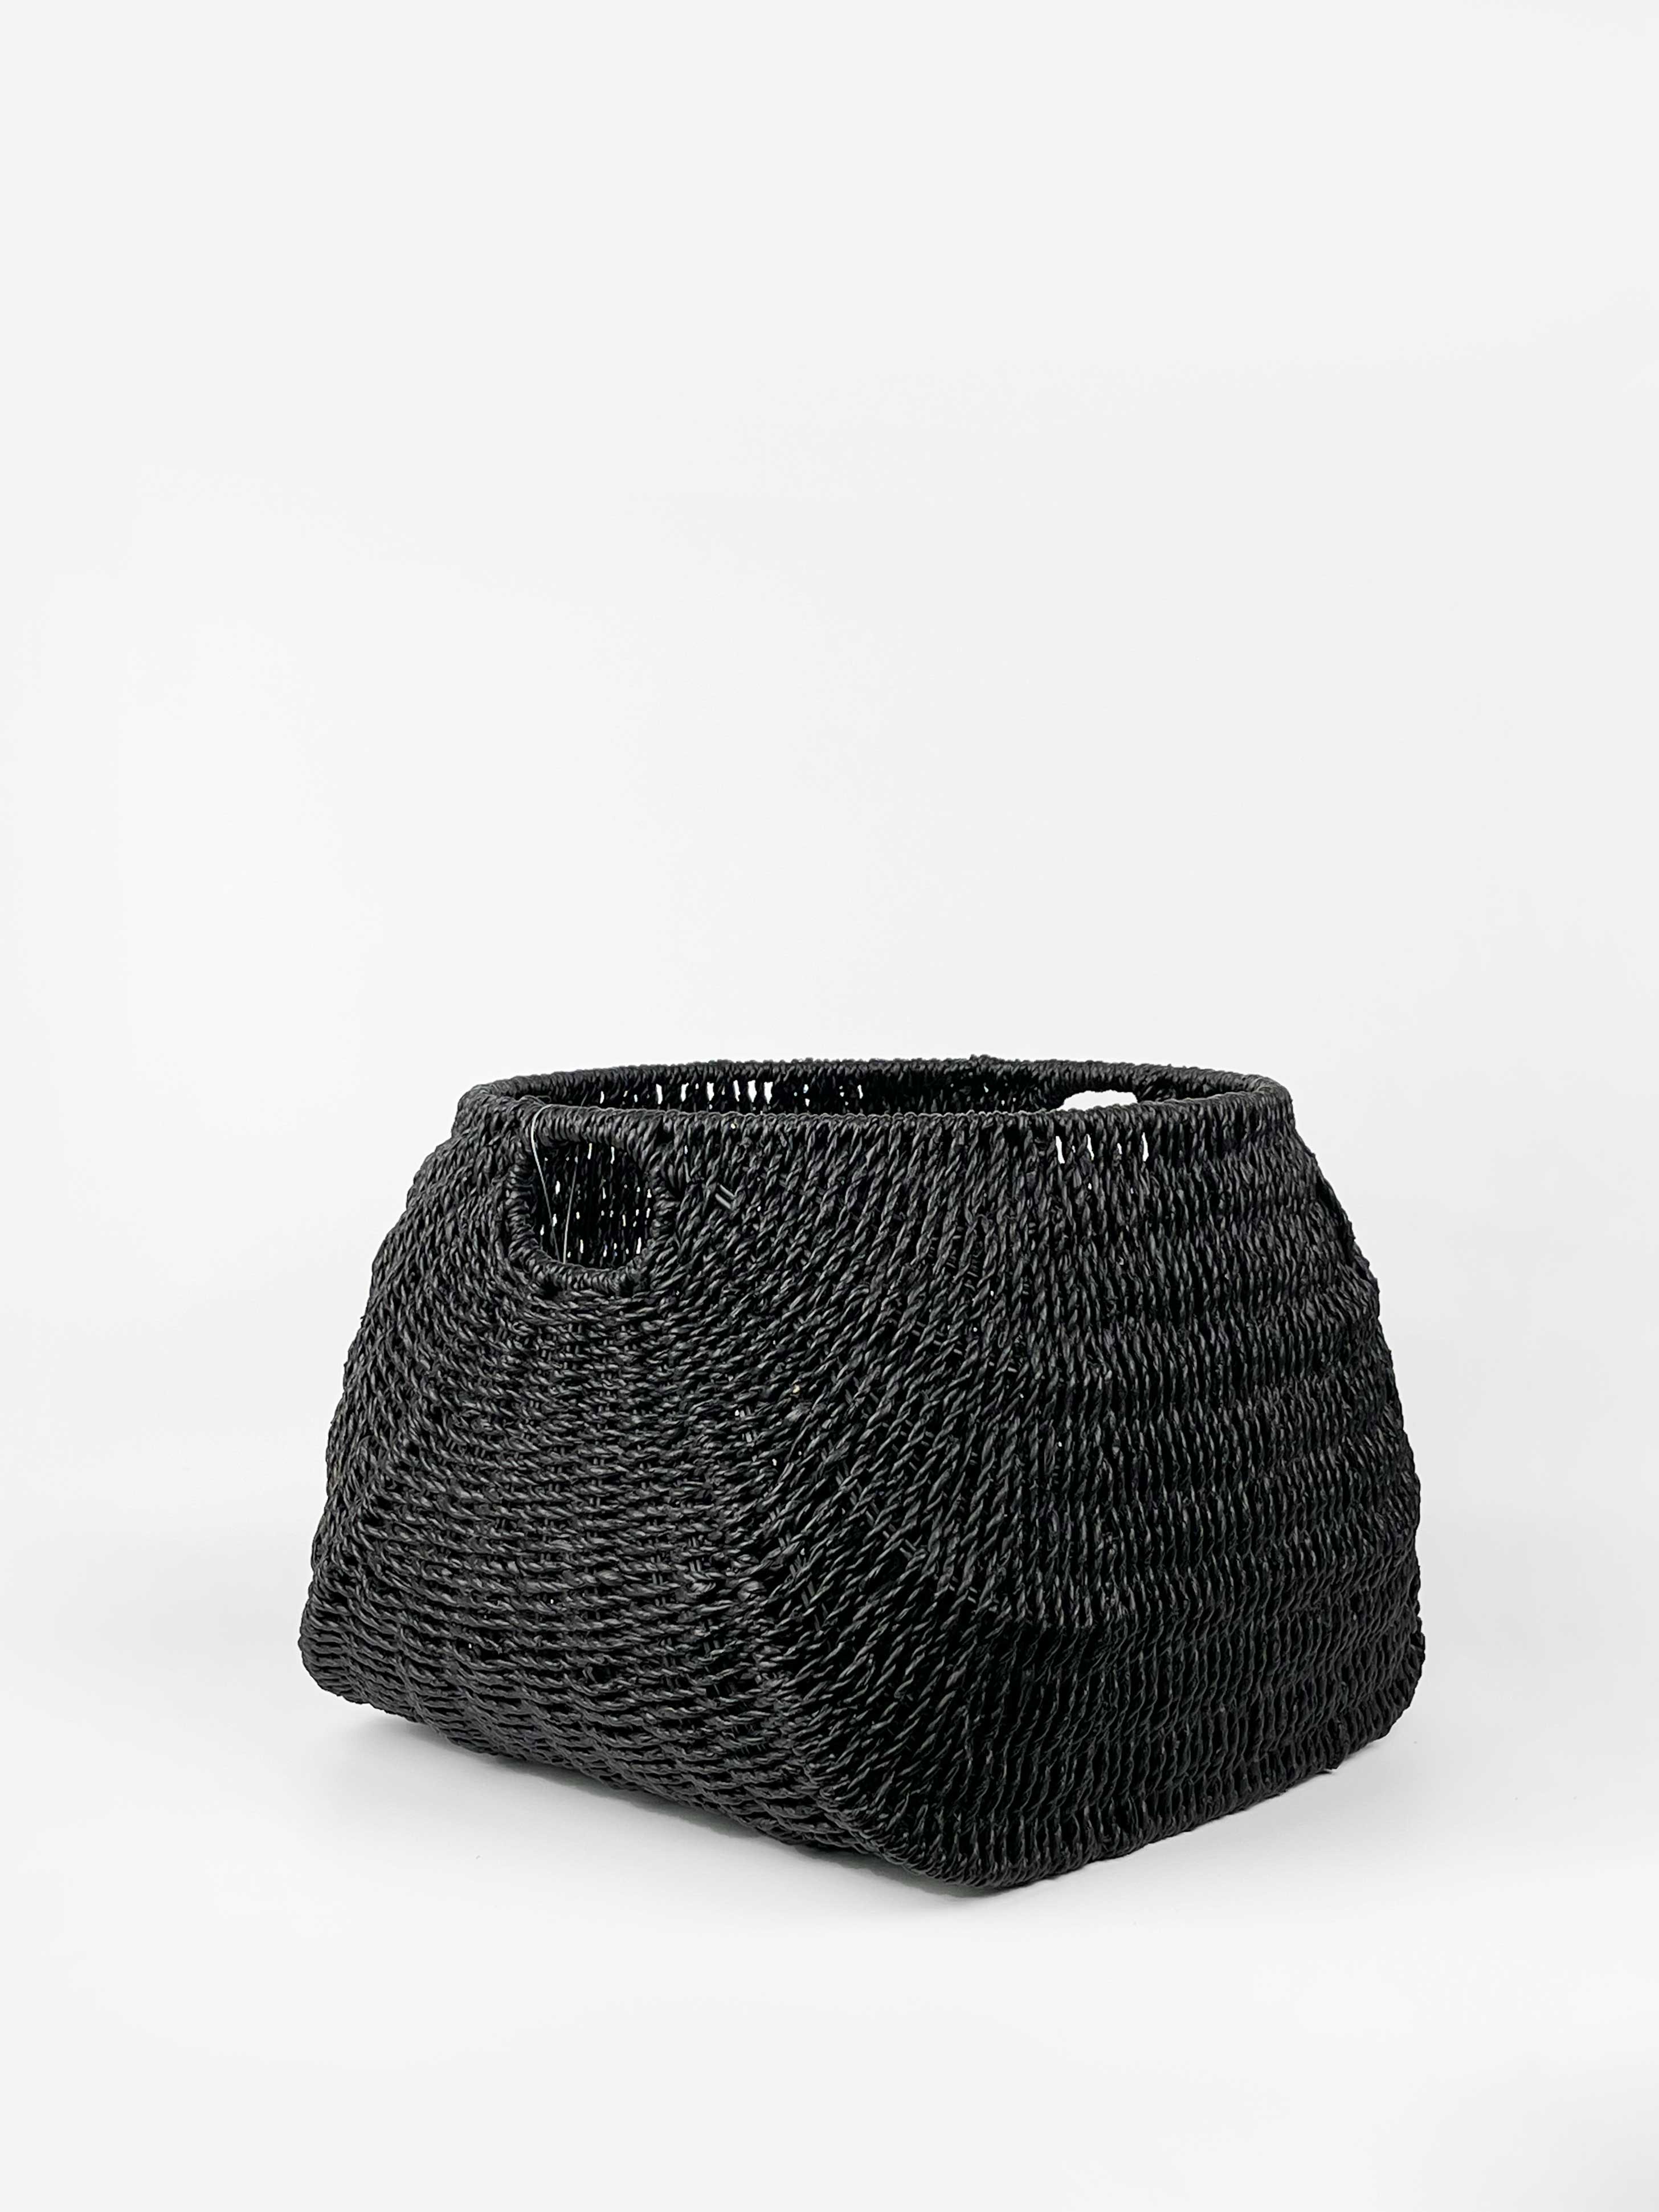 Coracle Blackwash Basket